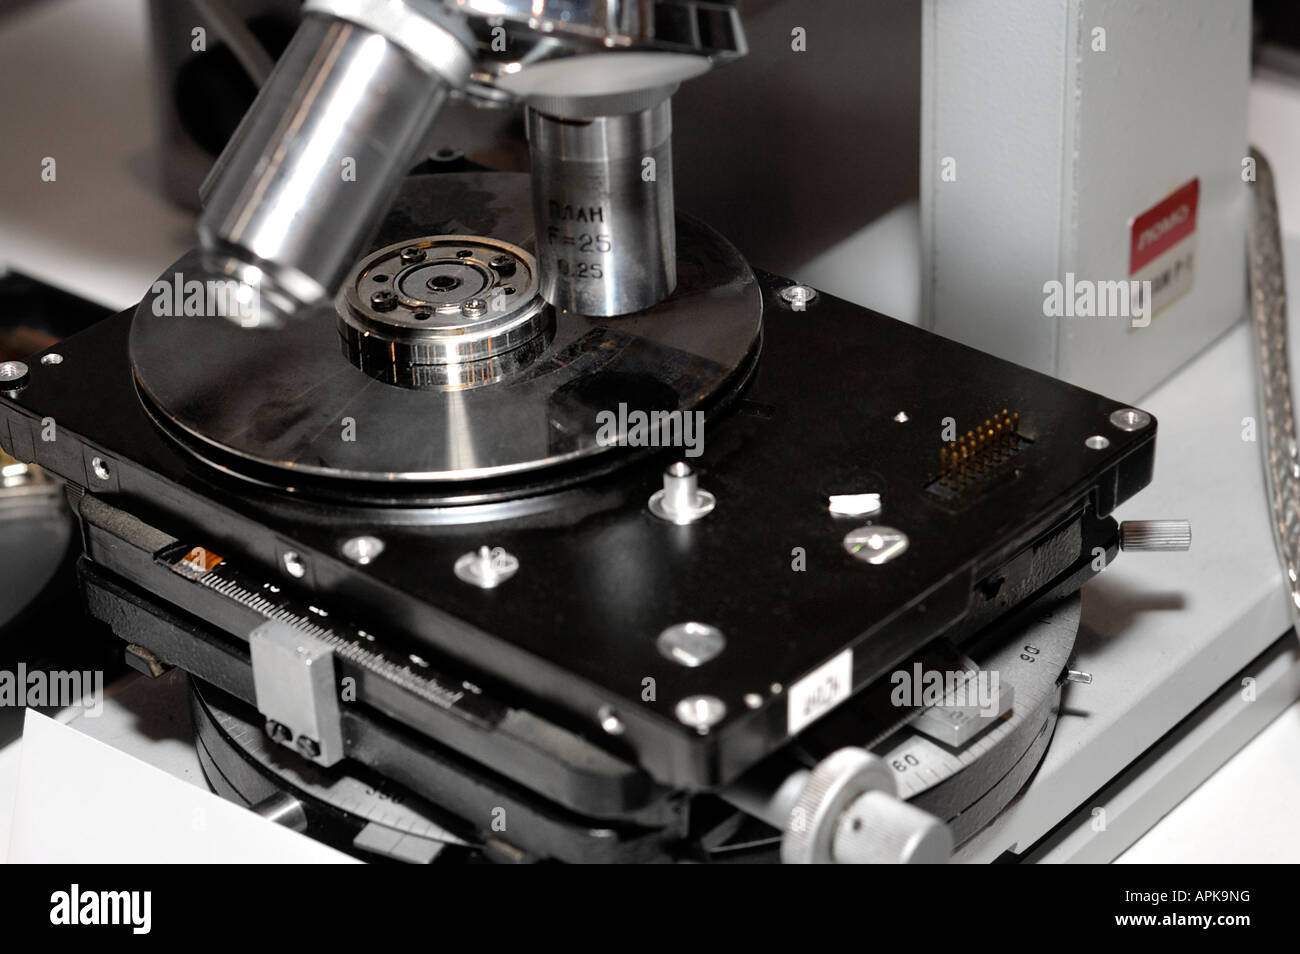 Hard disk drive under a microscope Stock Photo - Alamy